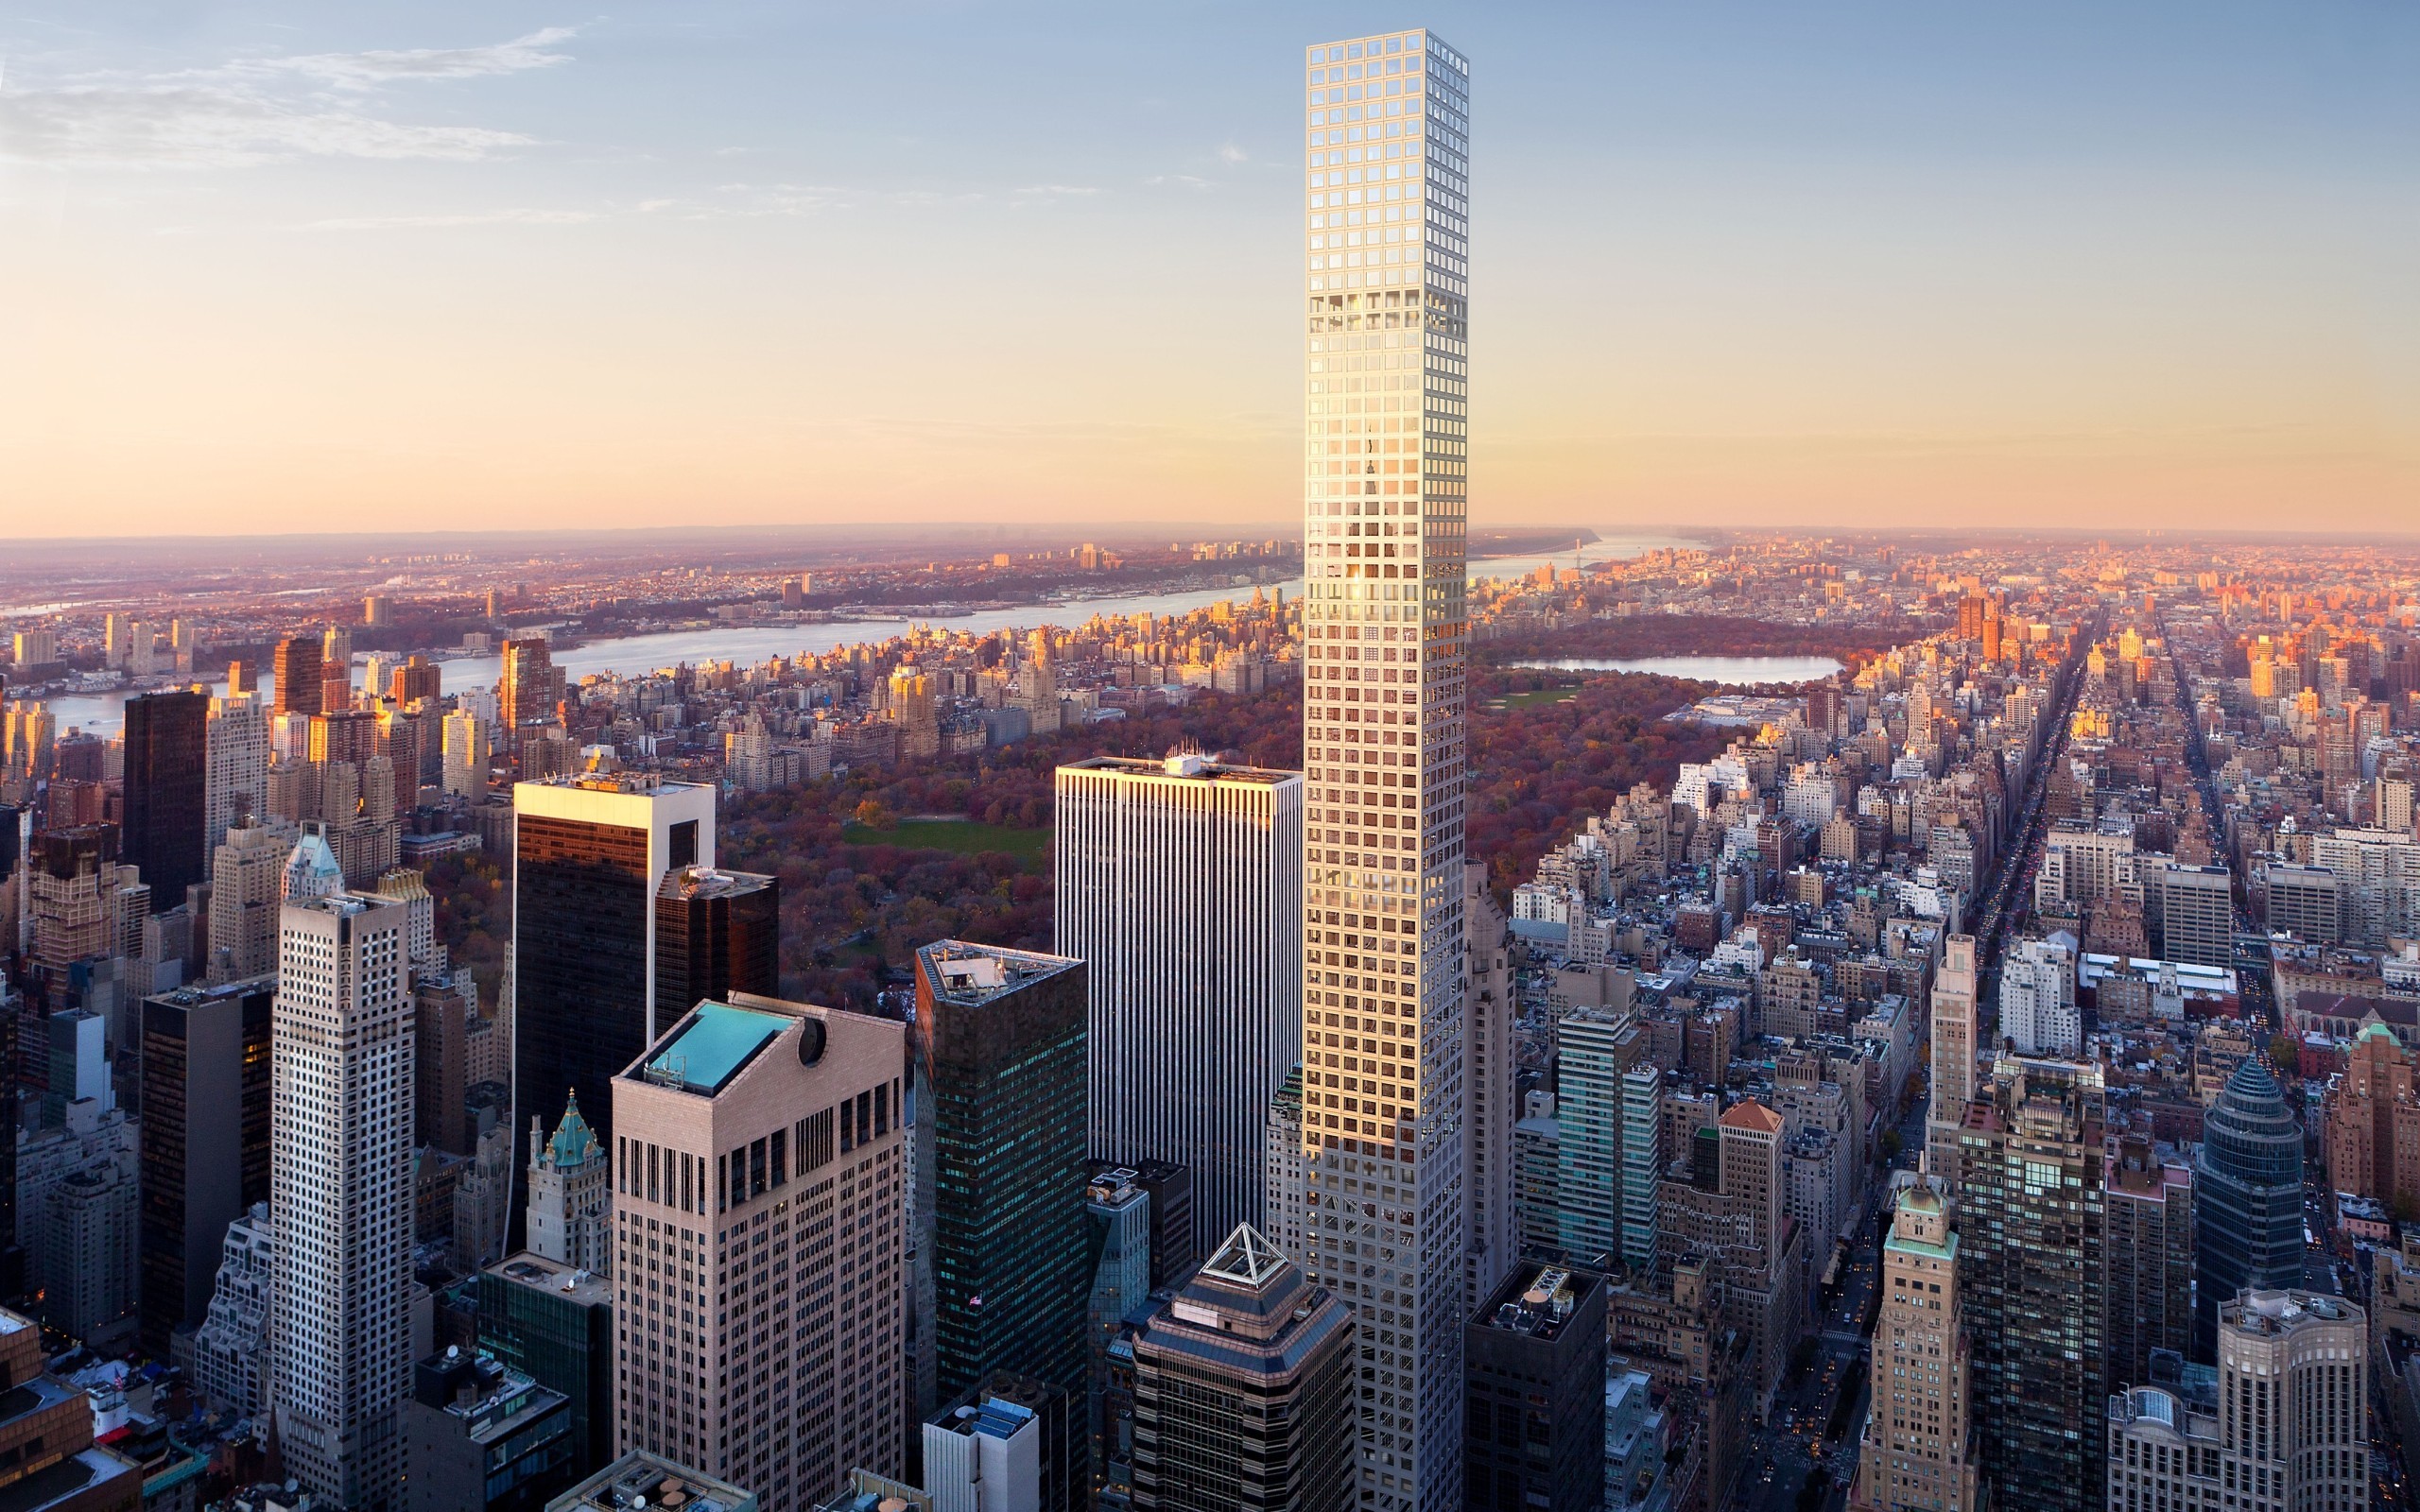 General 2560x1600 city cityscape New York City skyscraper Central Park building USA 432 Park Avenue